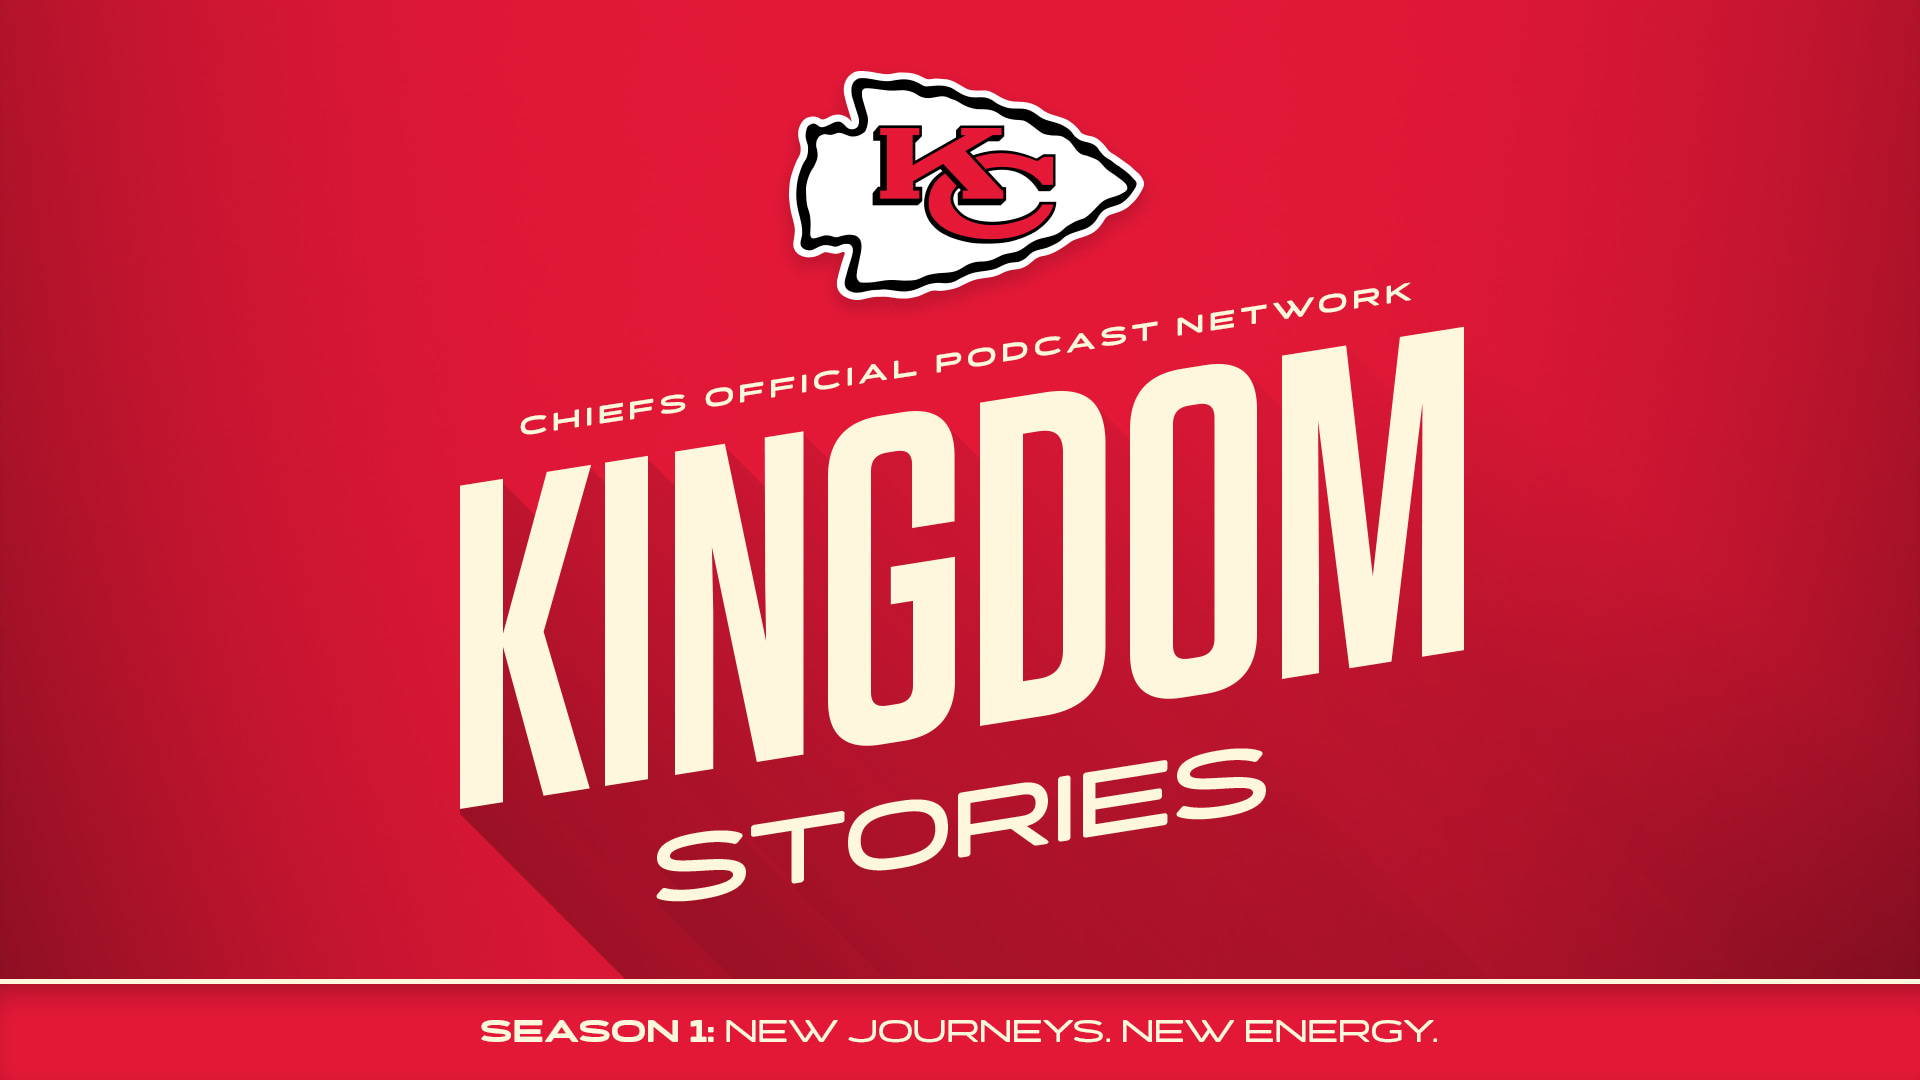 Chiefs Official Podcast Network | Kansas City Chiefs ...